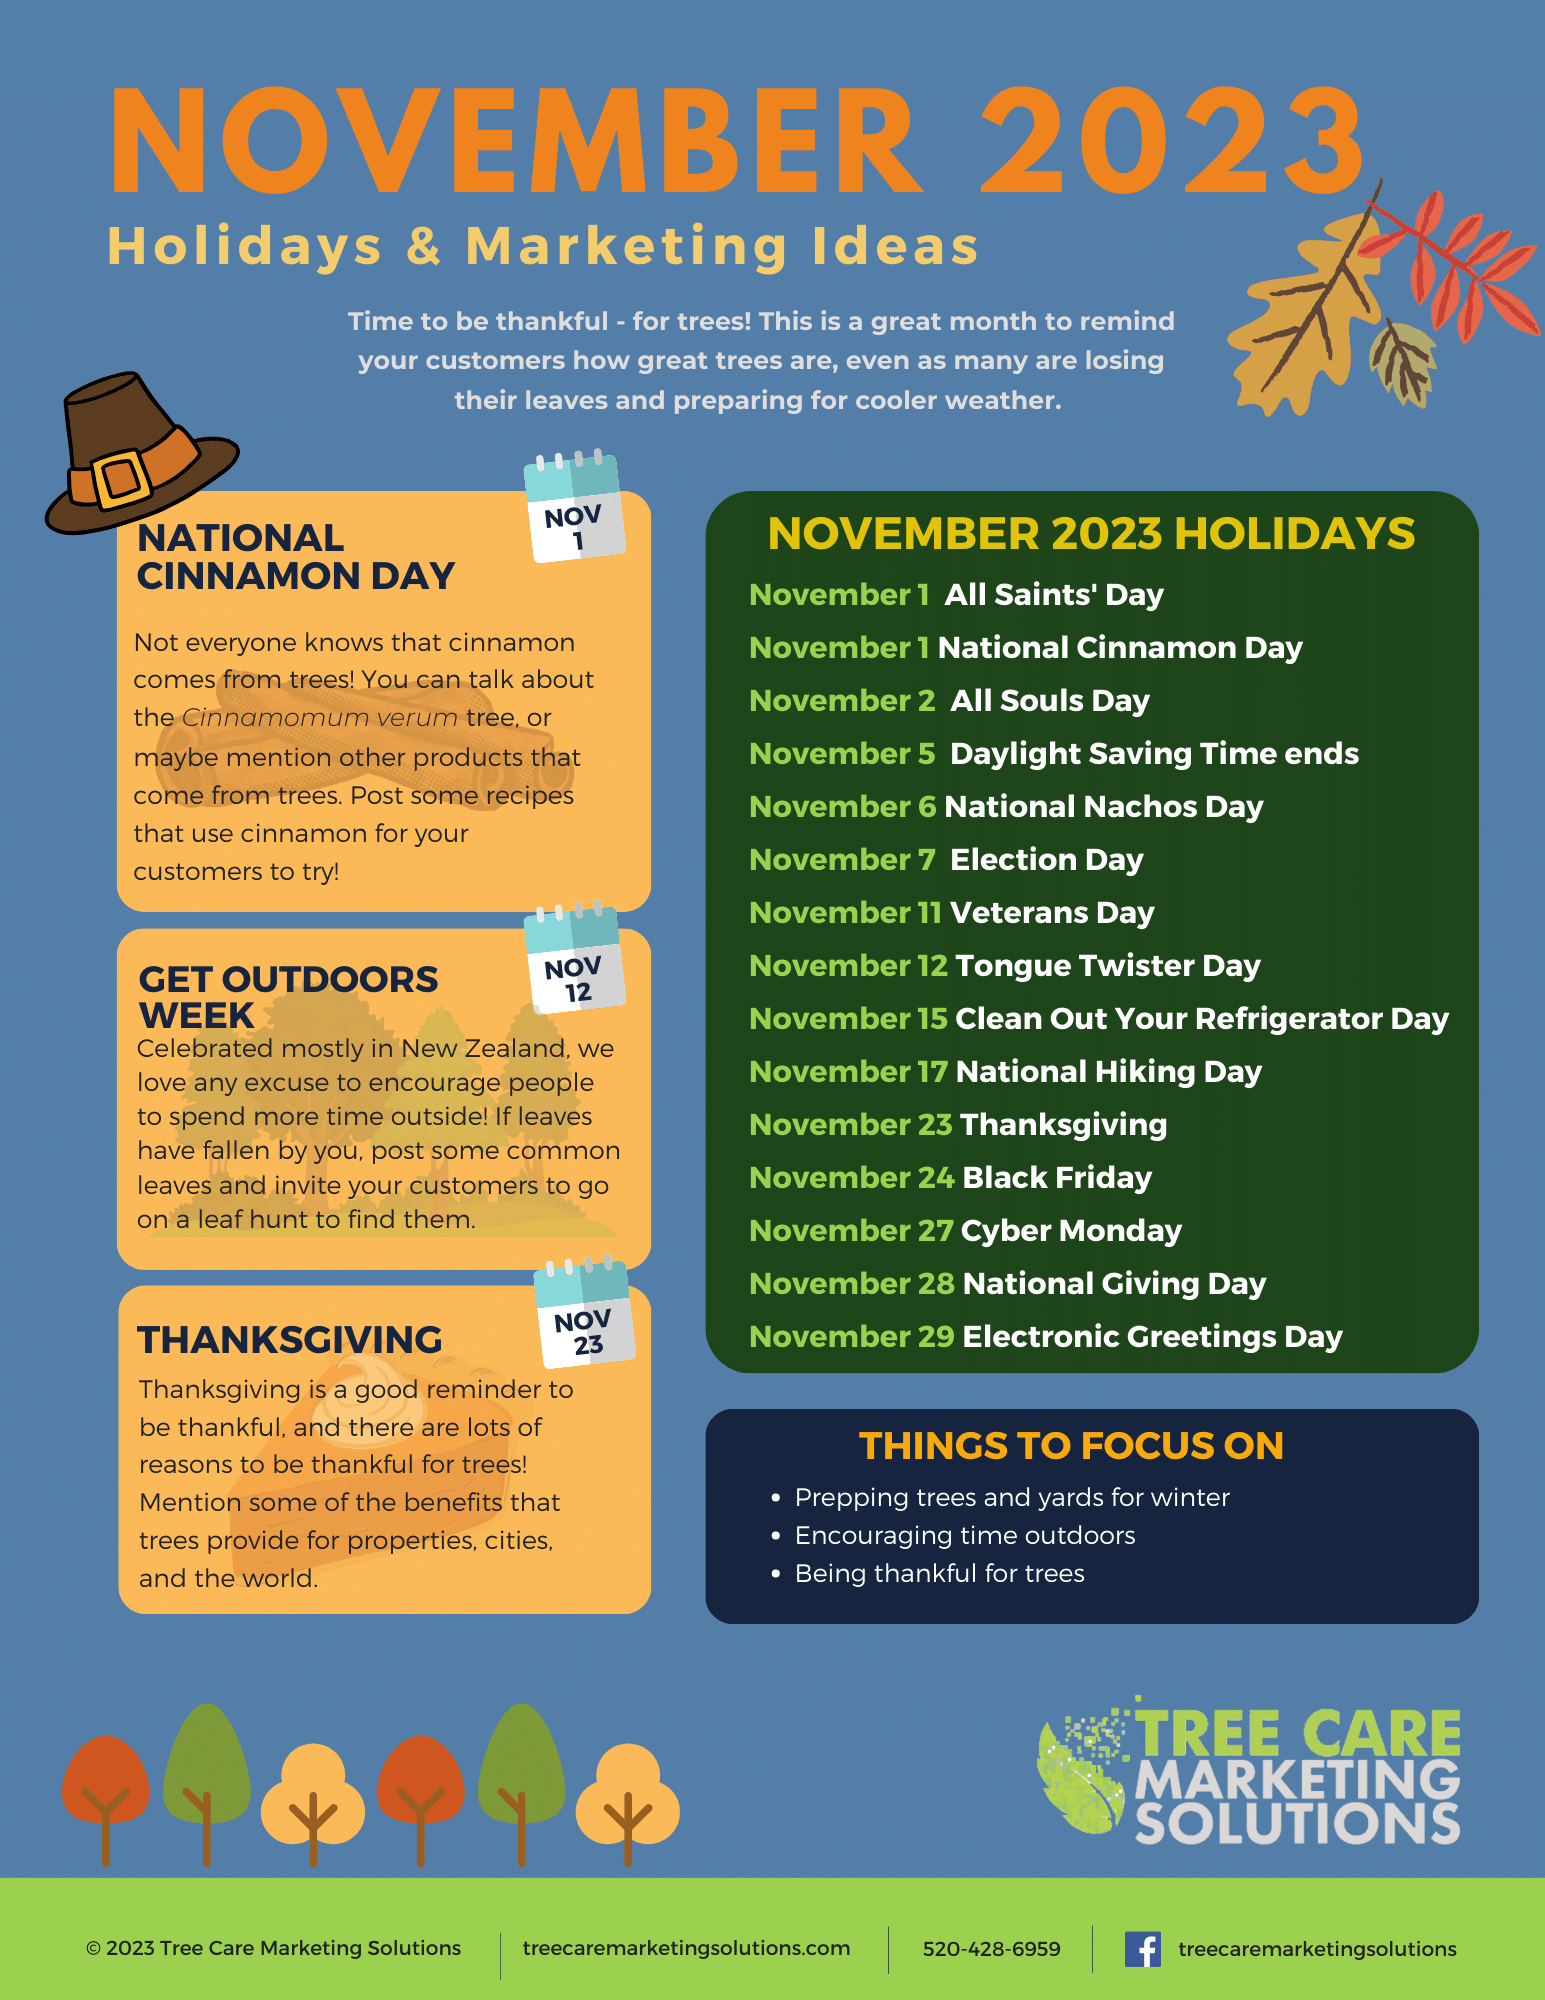 TCMS Monthly Marketing tips for November 2023